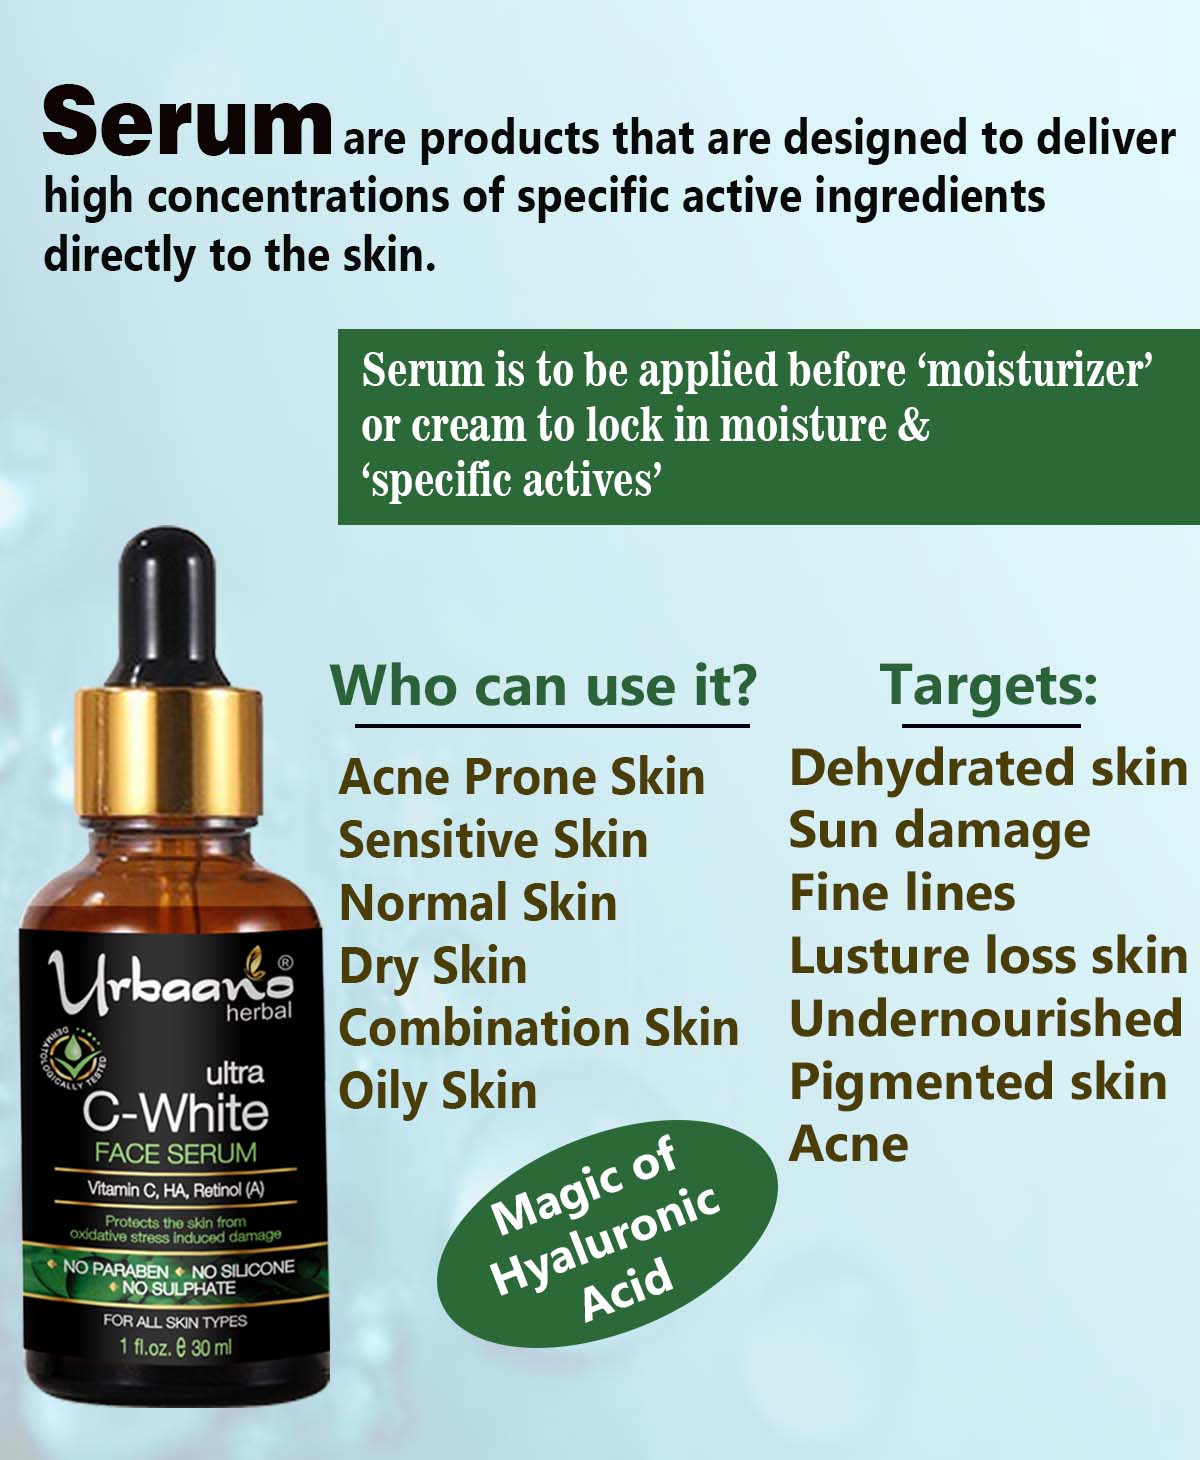 urbaano herbal vitamin c ultra white face serum for acne, oily pigmented skin